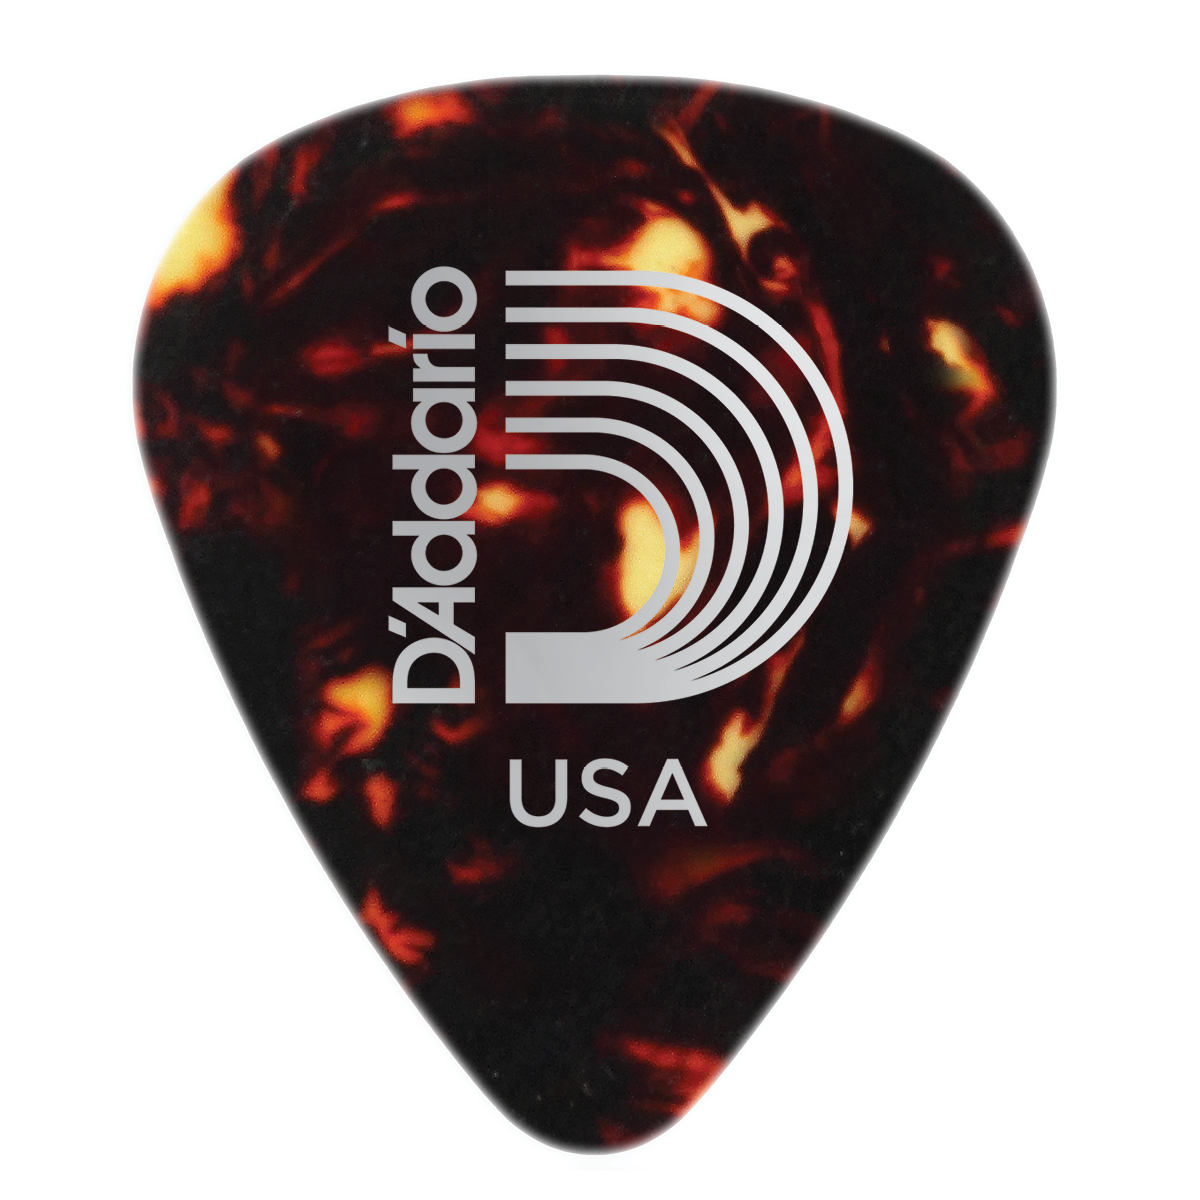 D'Addario Shell-Color Celluloid Guitar Pick, Light